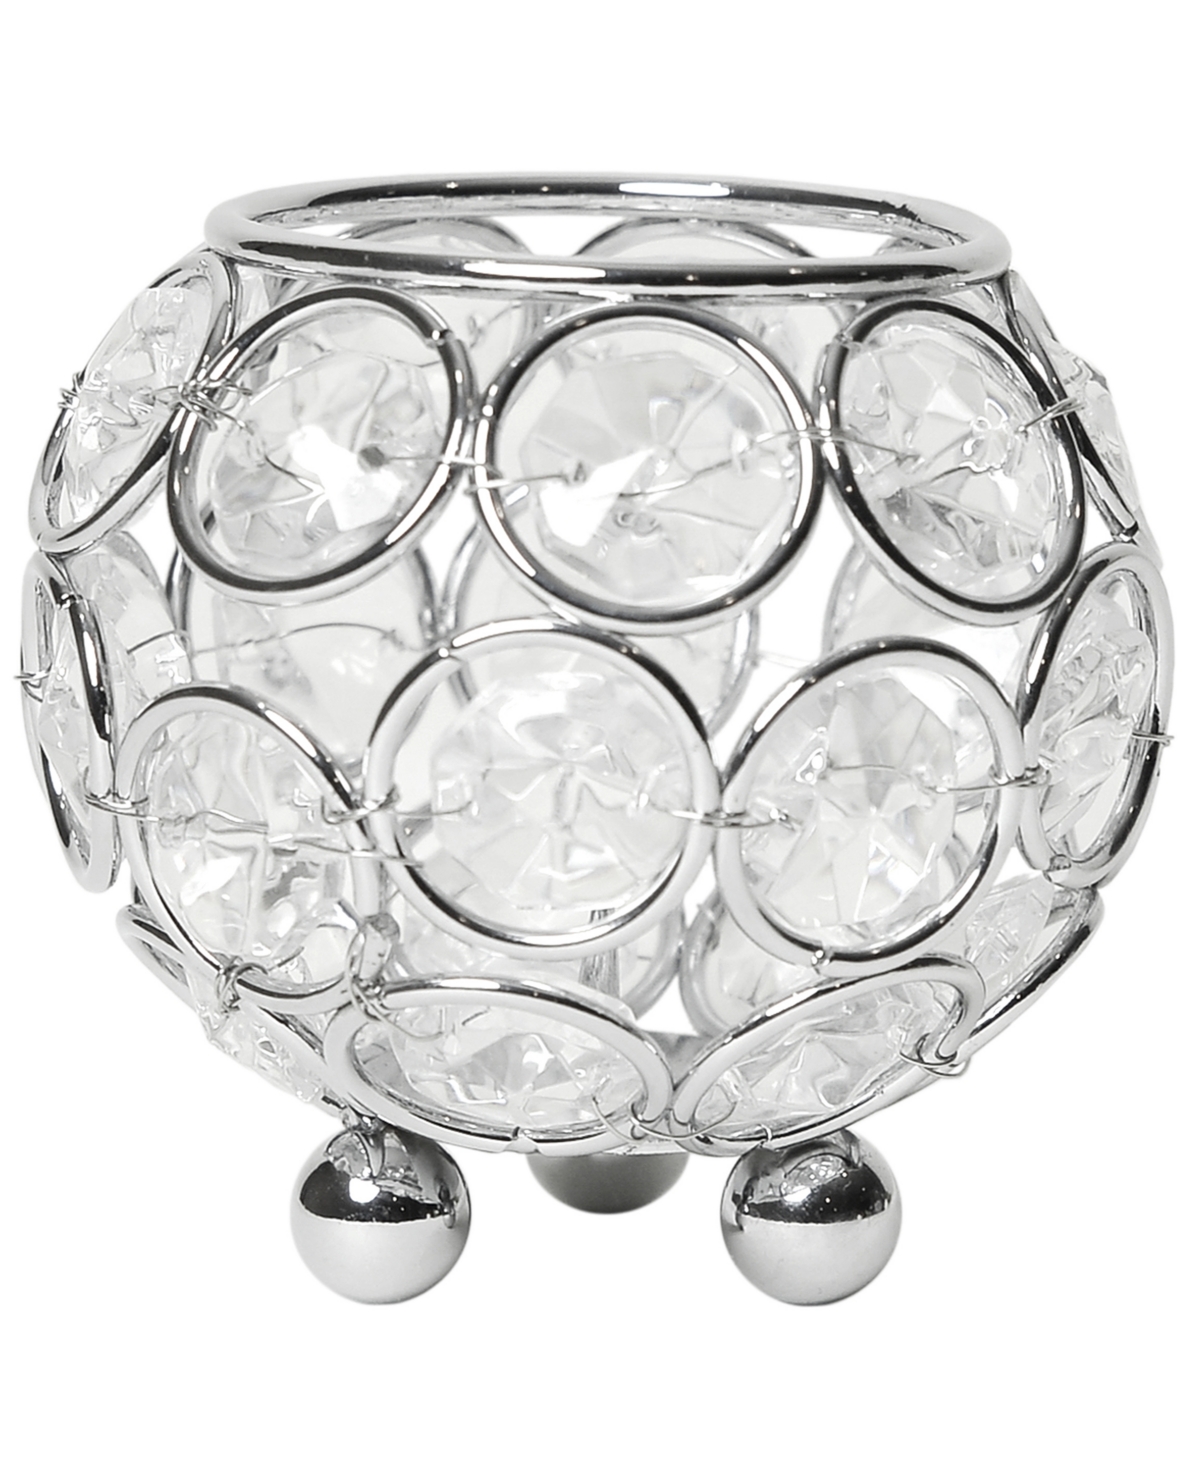 Elipse Crystal Circular Bowl Candle Holder, Flower Vase, Wedding Centerpiece - Chrome